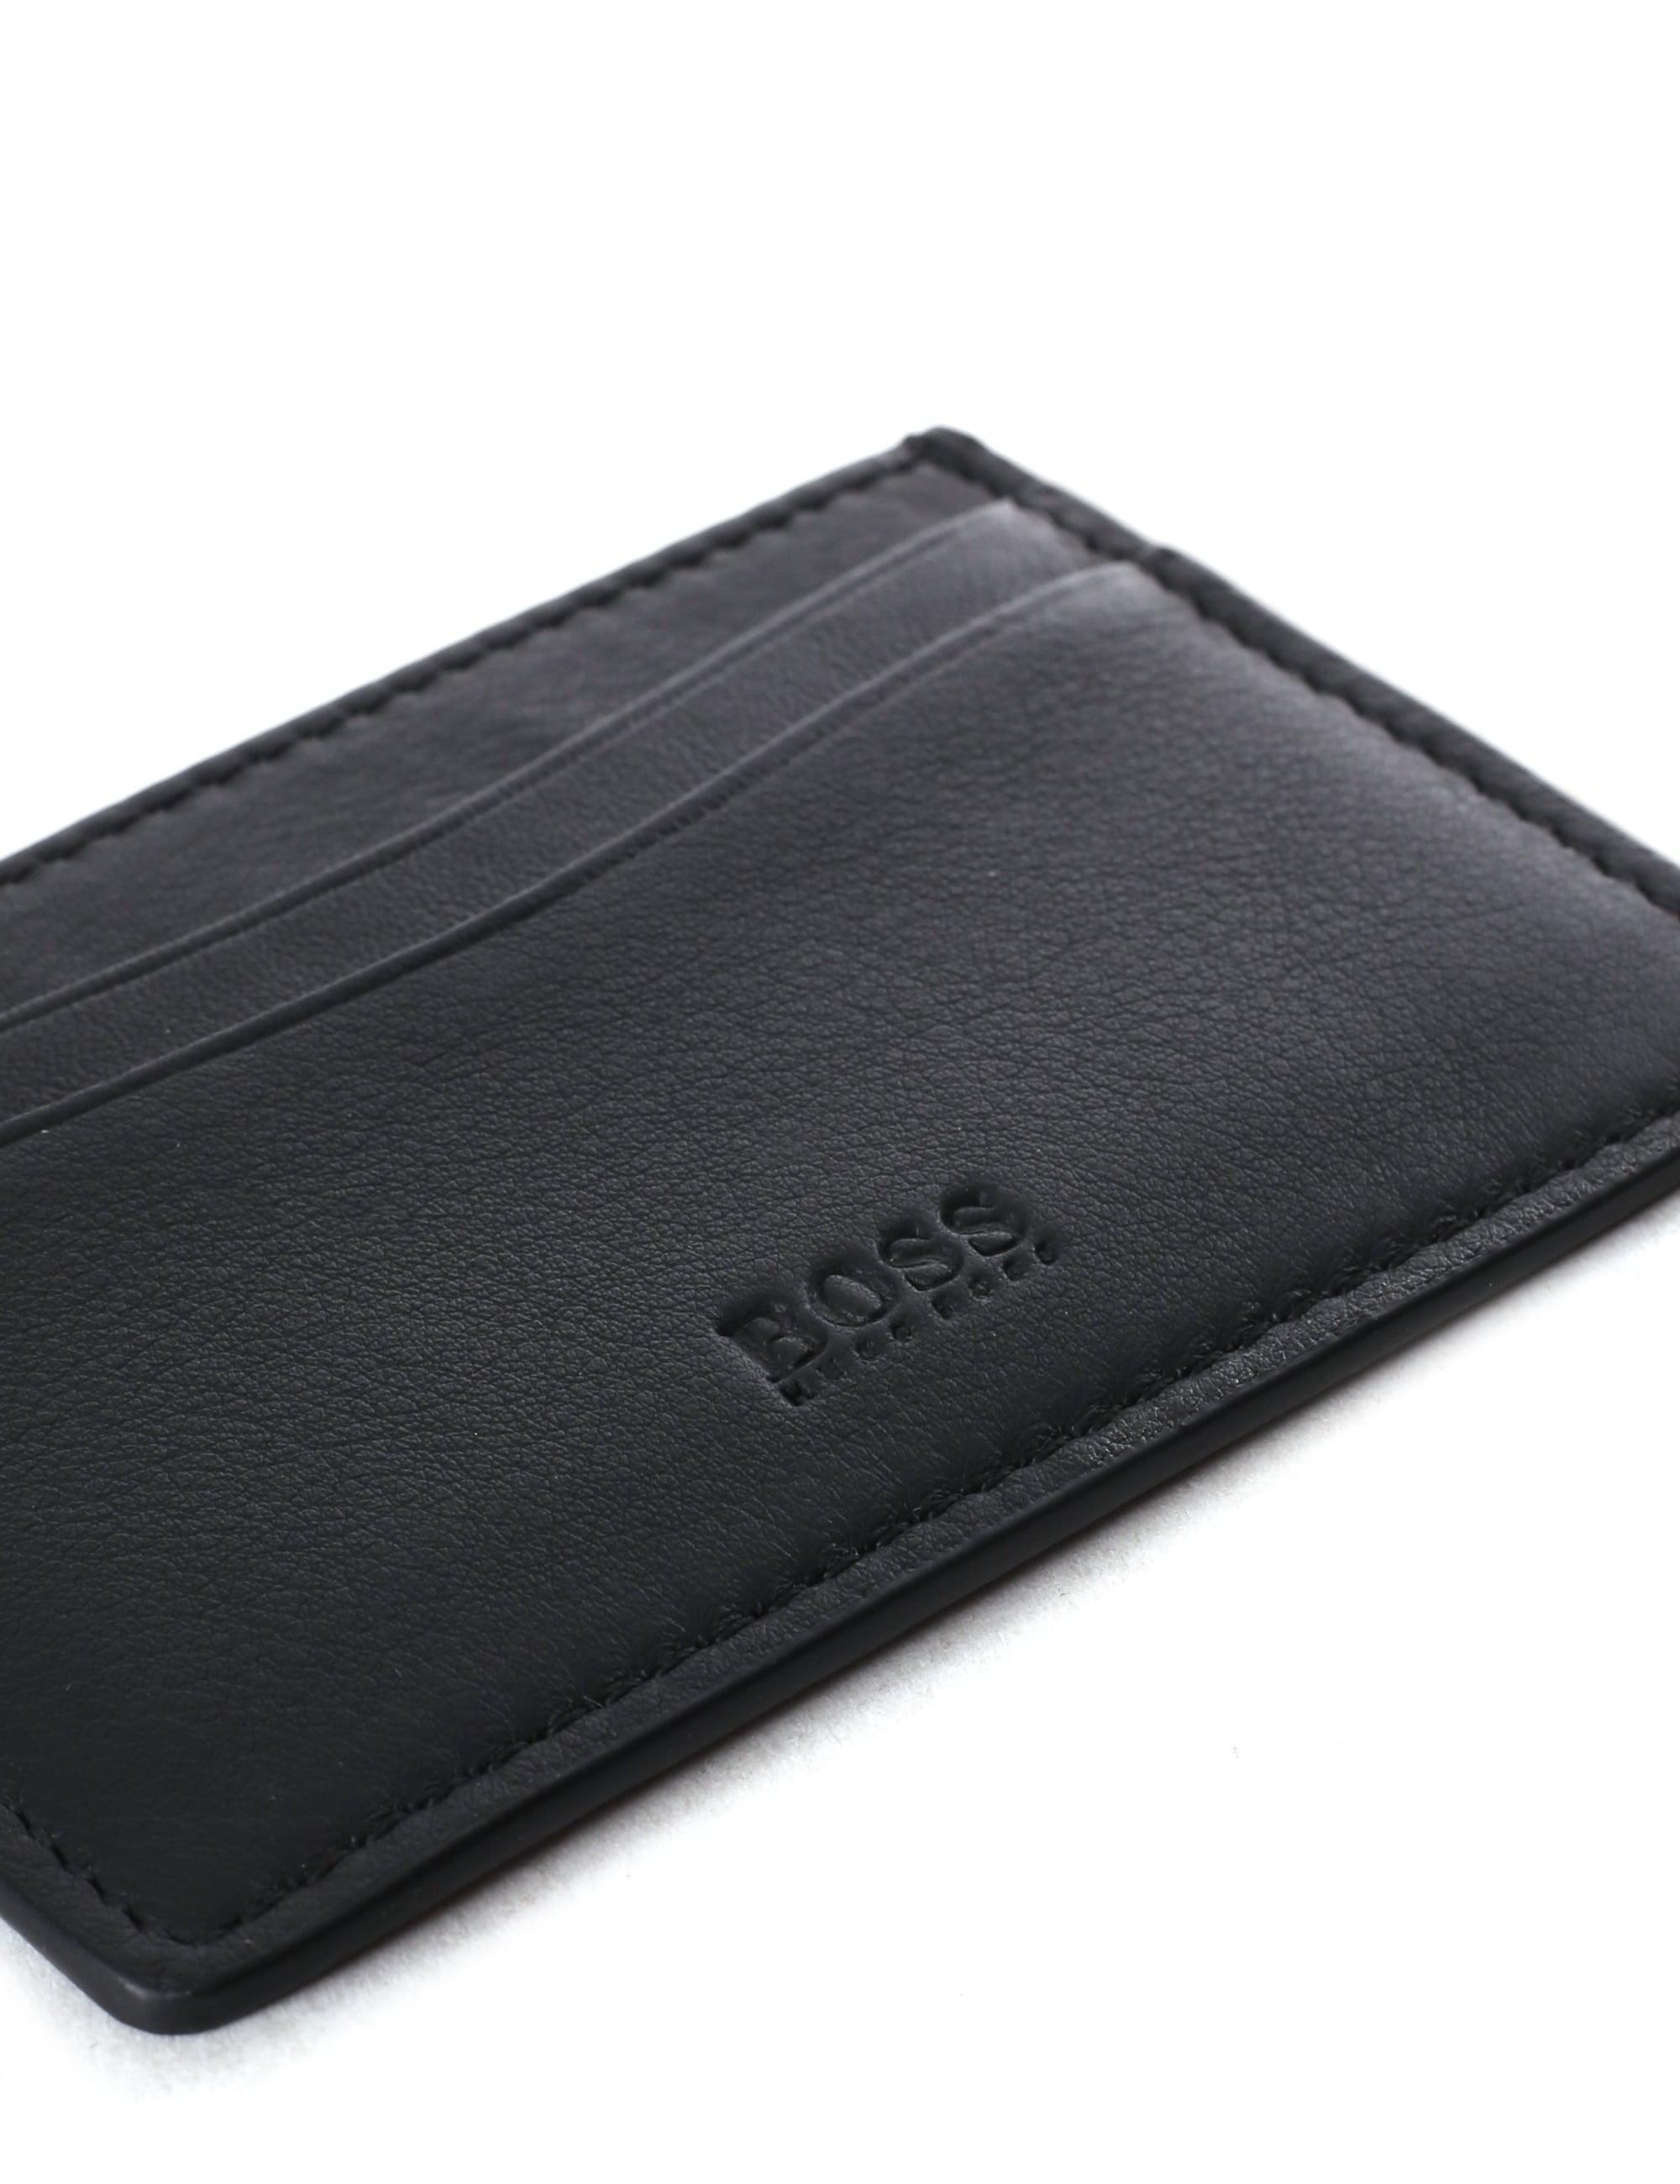 hugo boss credit card holder factory store 789f5 0dea8